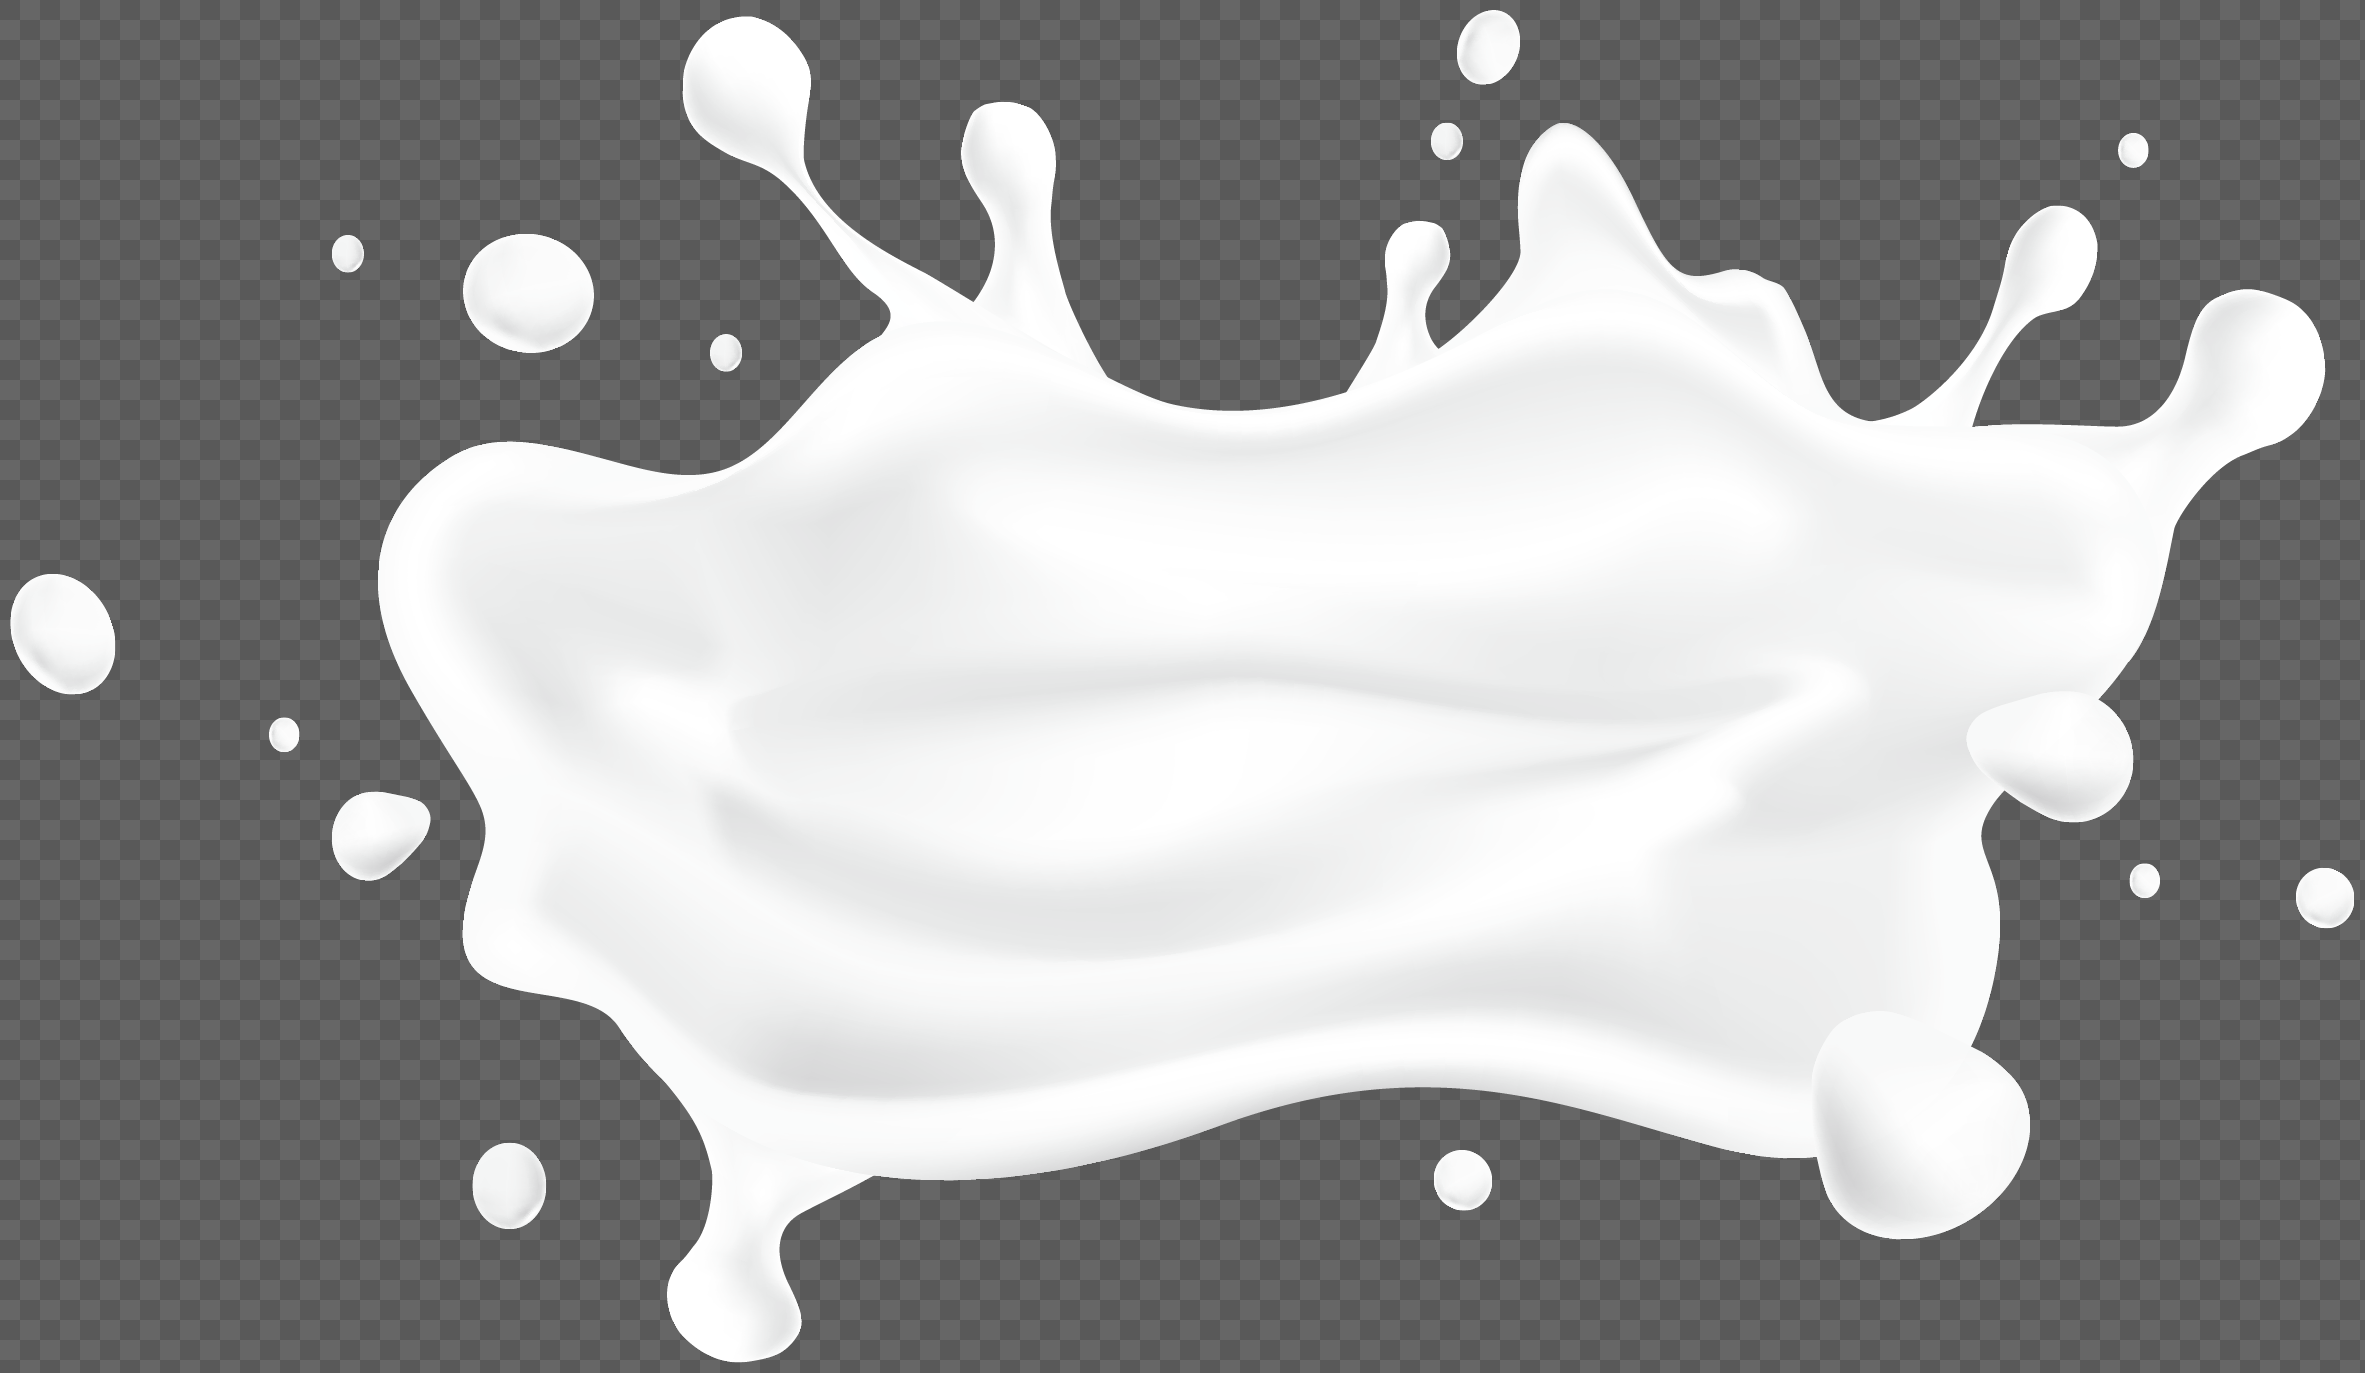 Splash Of White Milk Splash White Milk Png Transparent Clipart Image ...